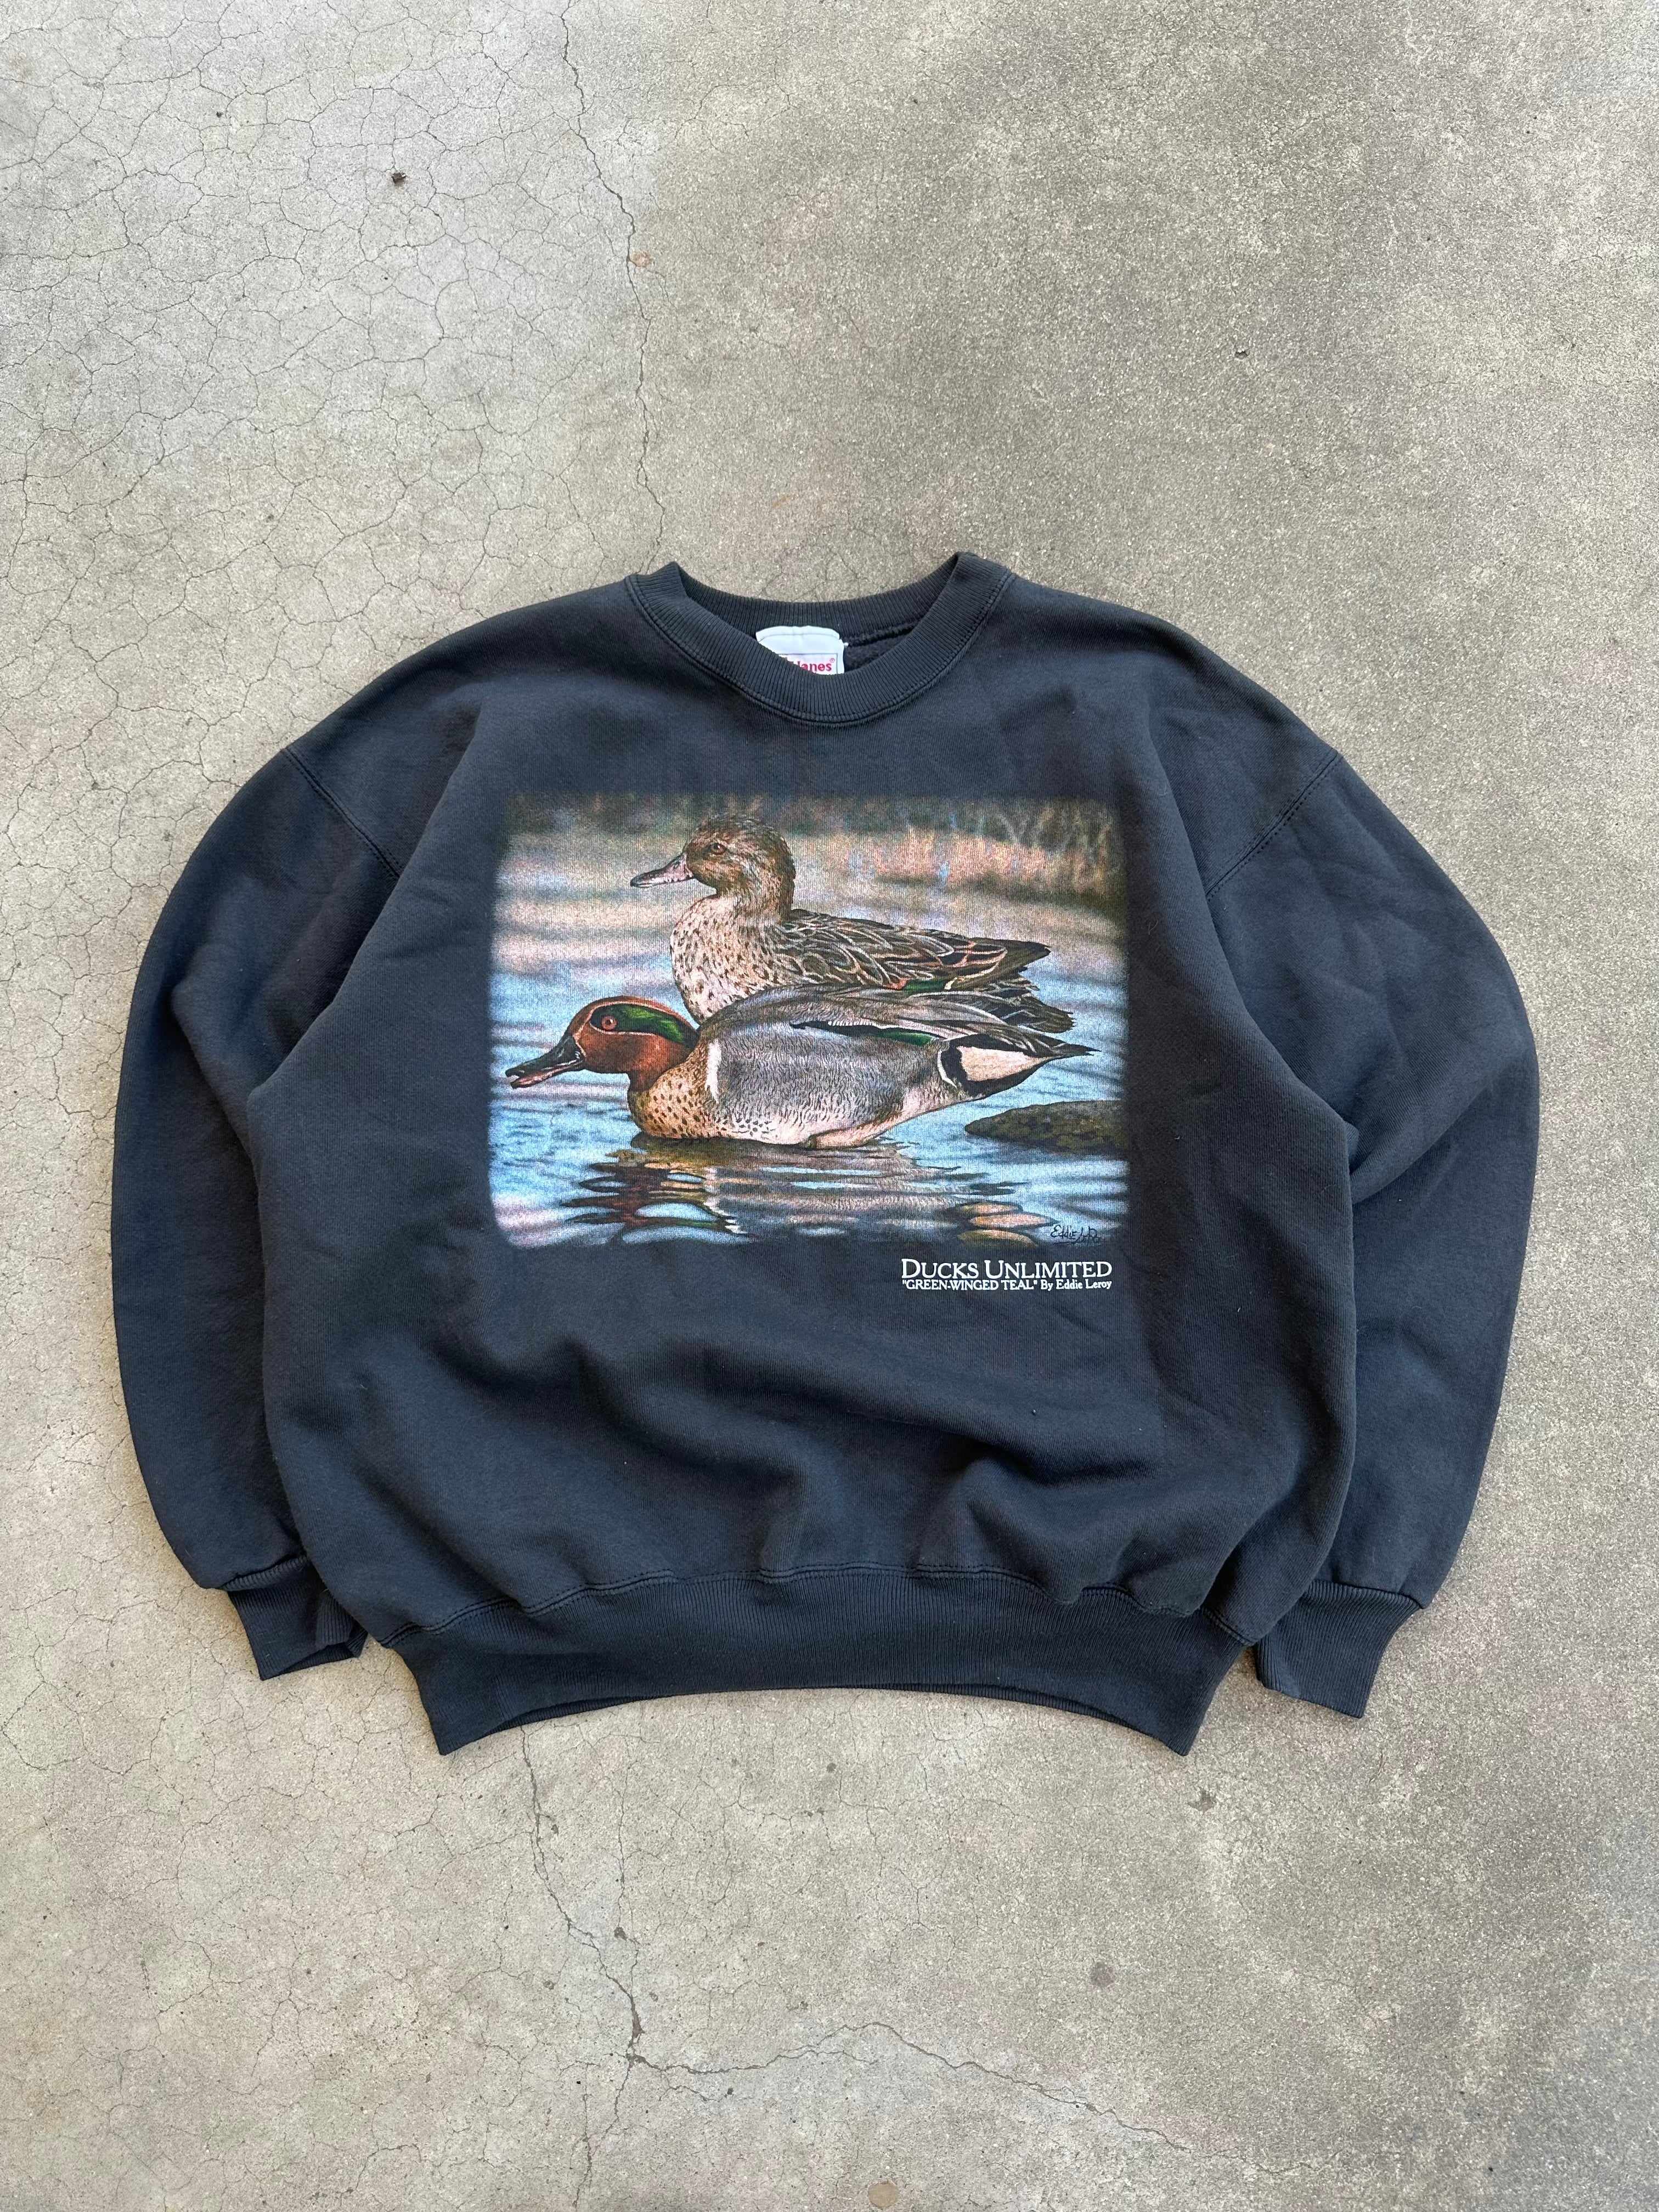 1990’s Ducks Unlimited Crewneck (M/L)